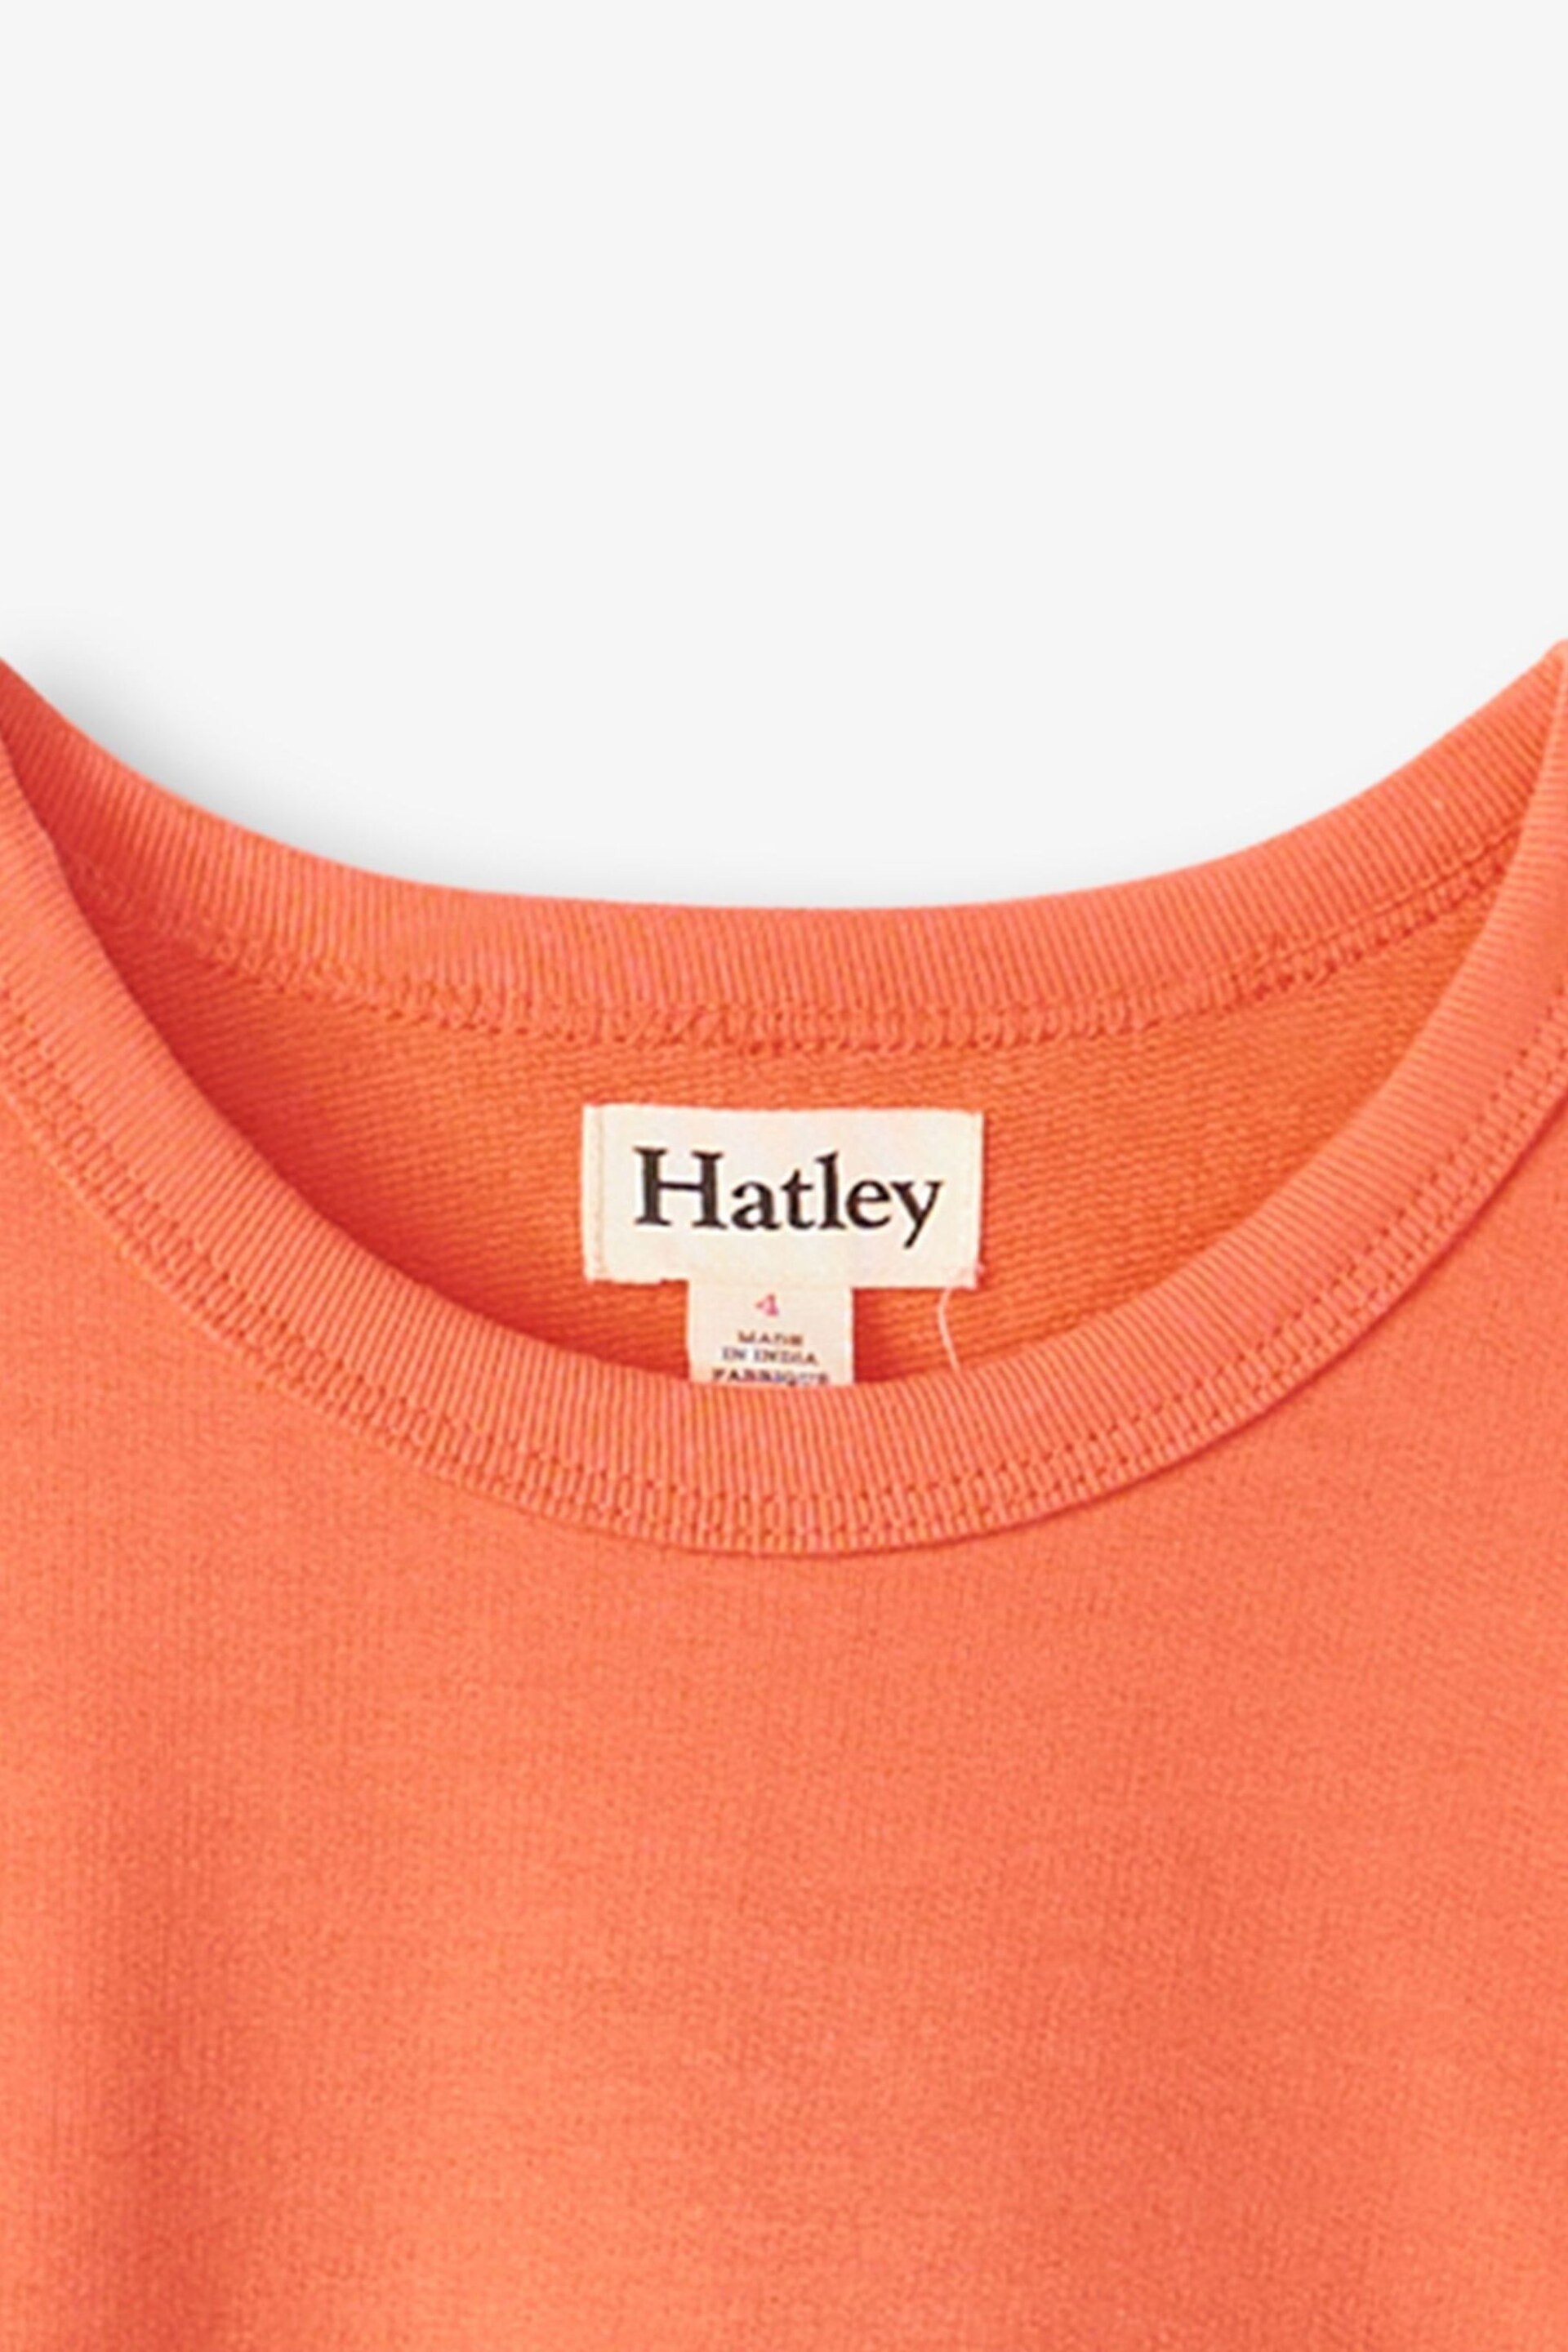 Hatley Orange Dinosaur Glow T-Shirt - Image 6 of 6